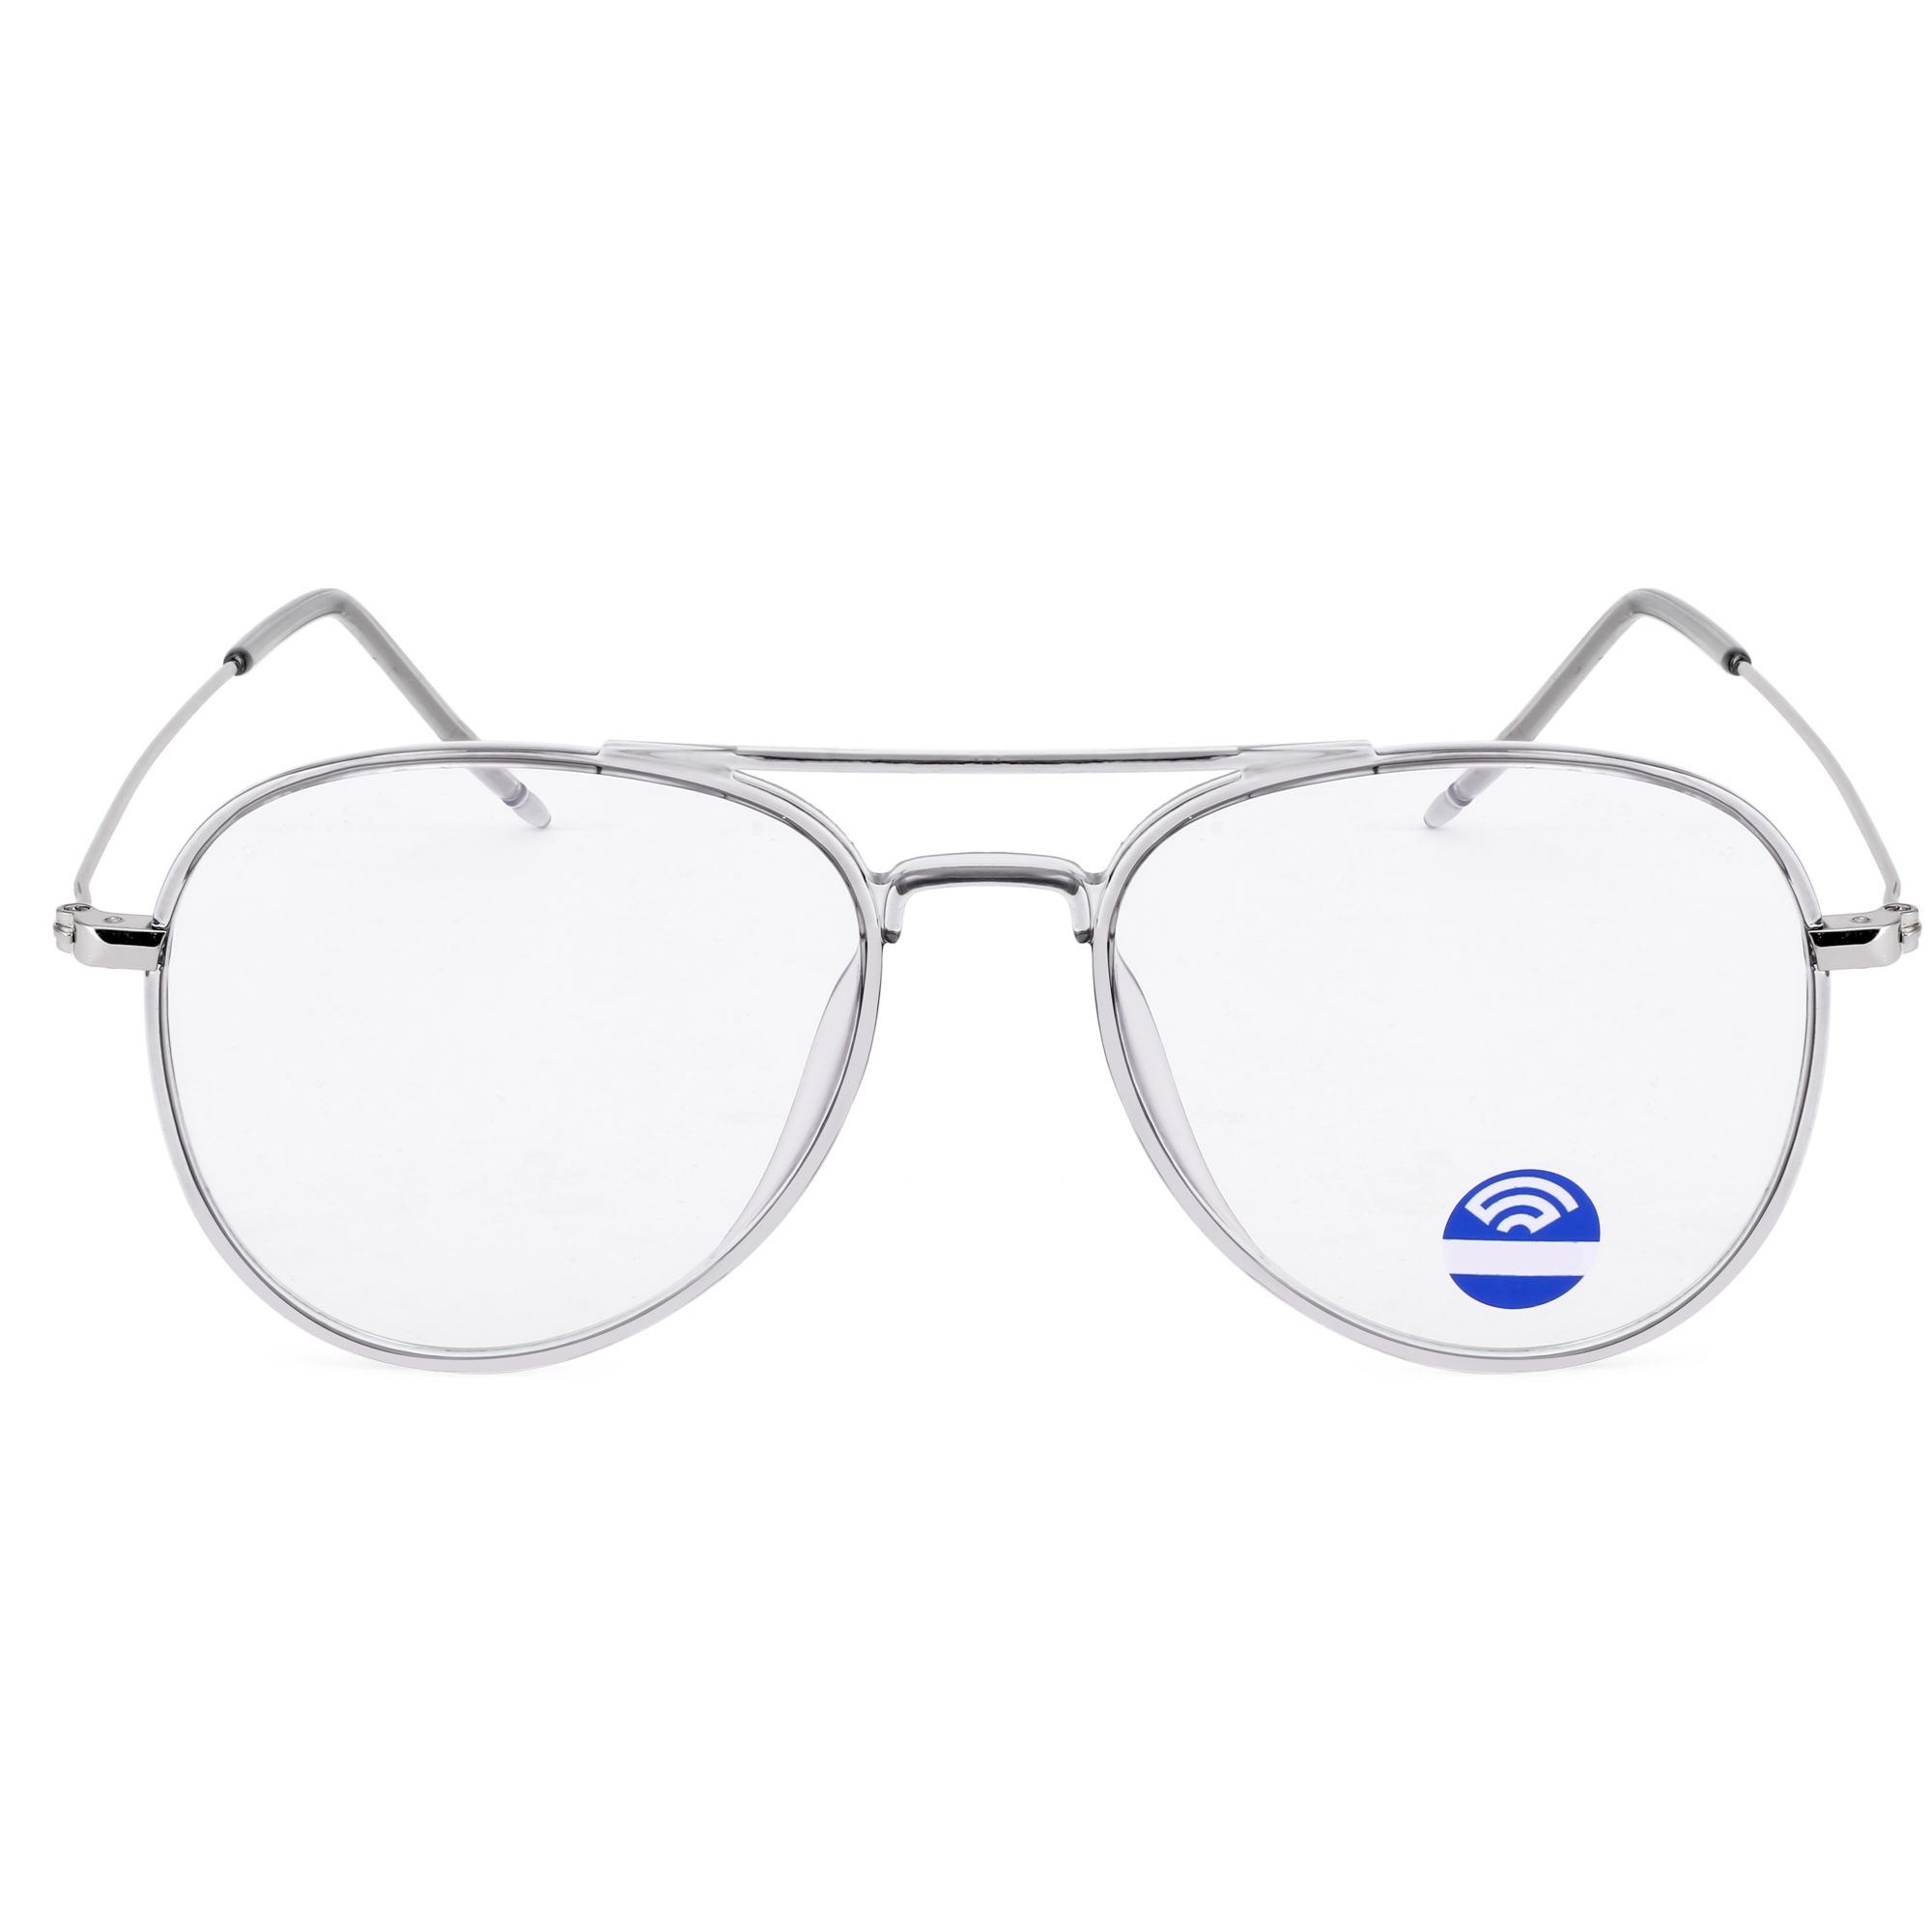 Buy ROYAL SON Blue Cut Light Ray Block Glasses Anti-Glare Lens Mens ...